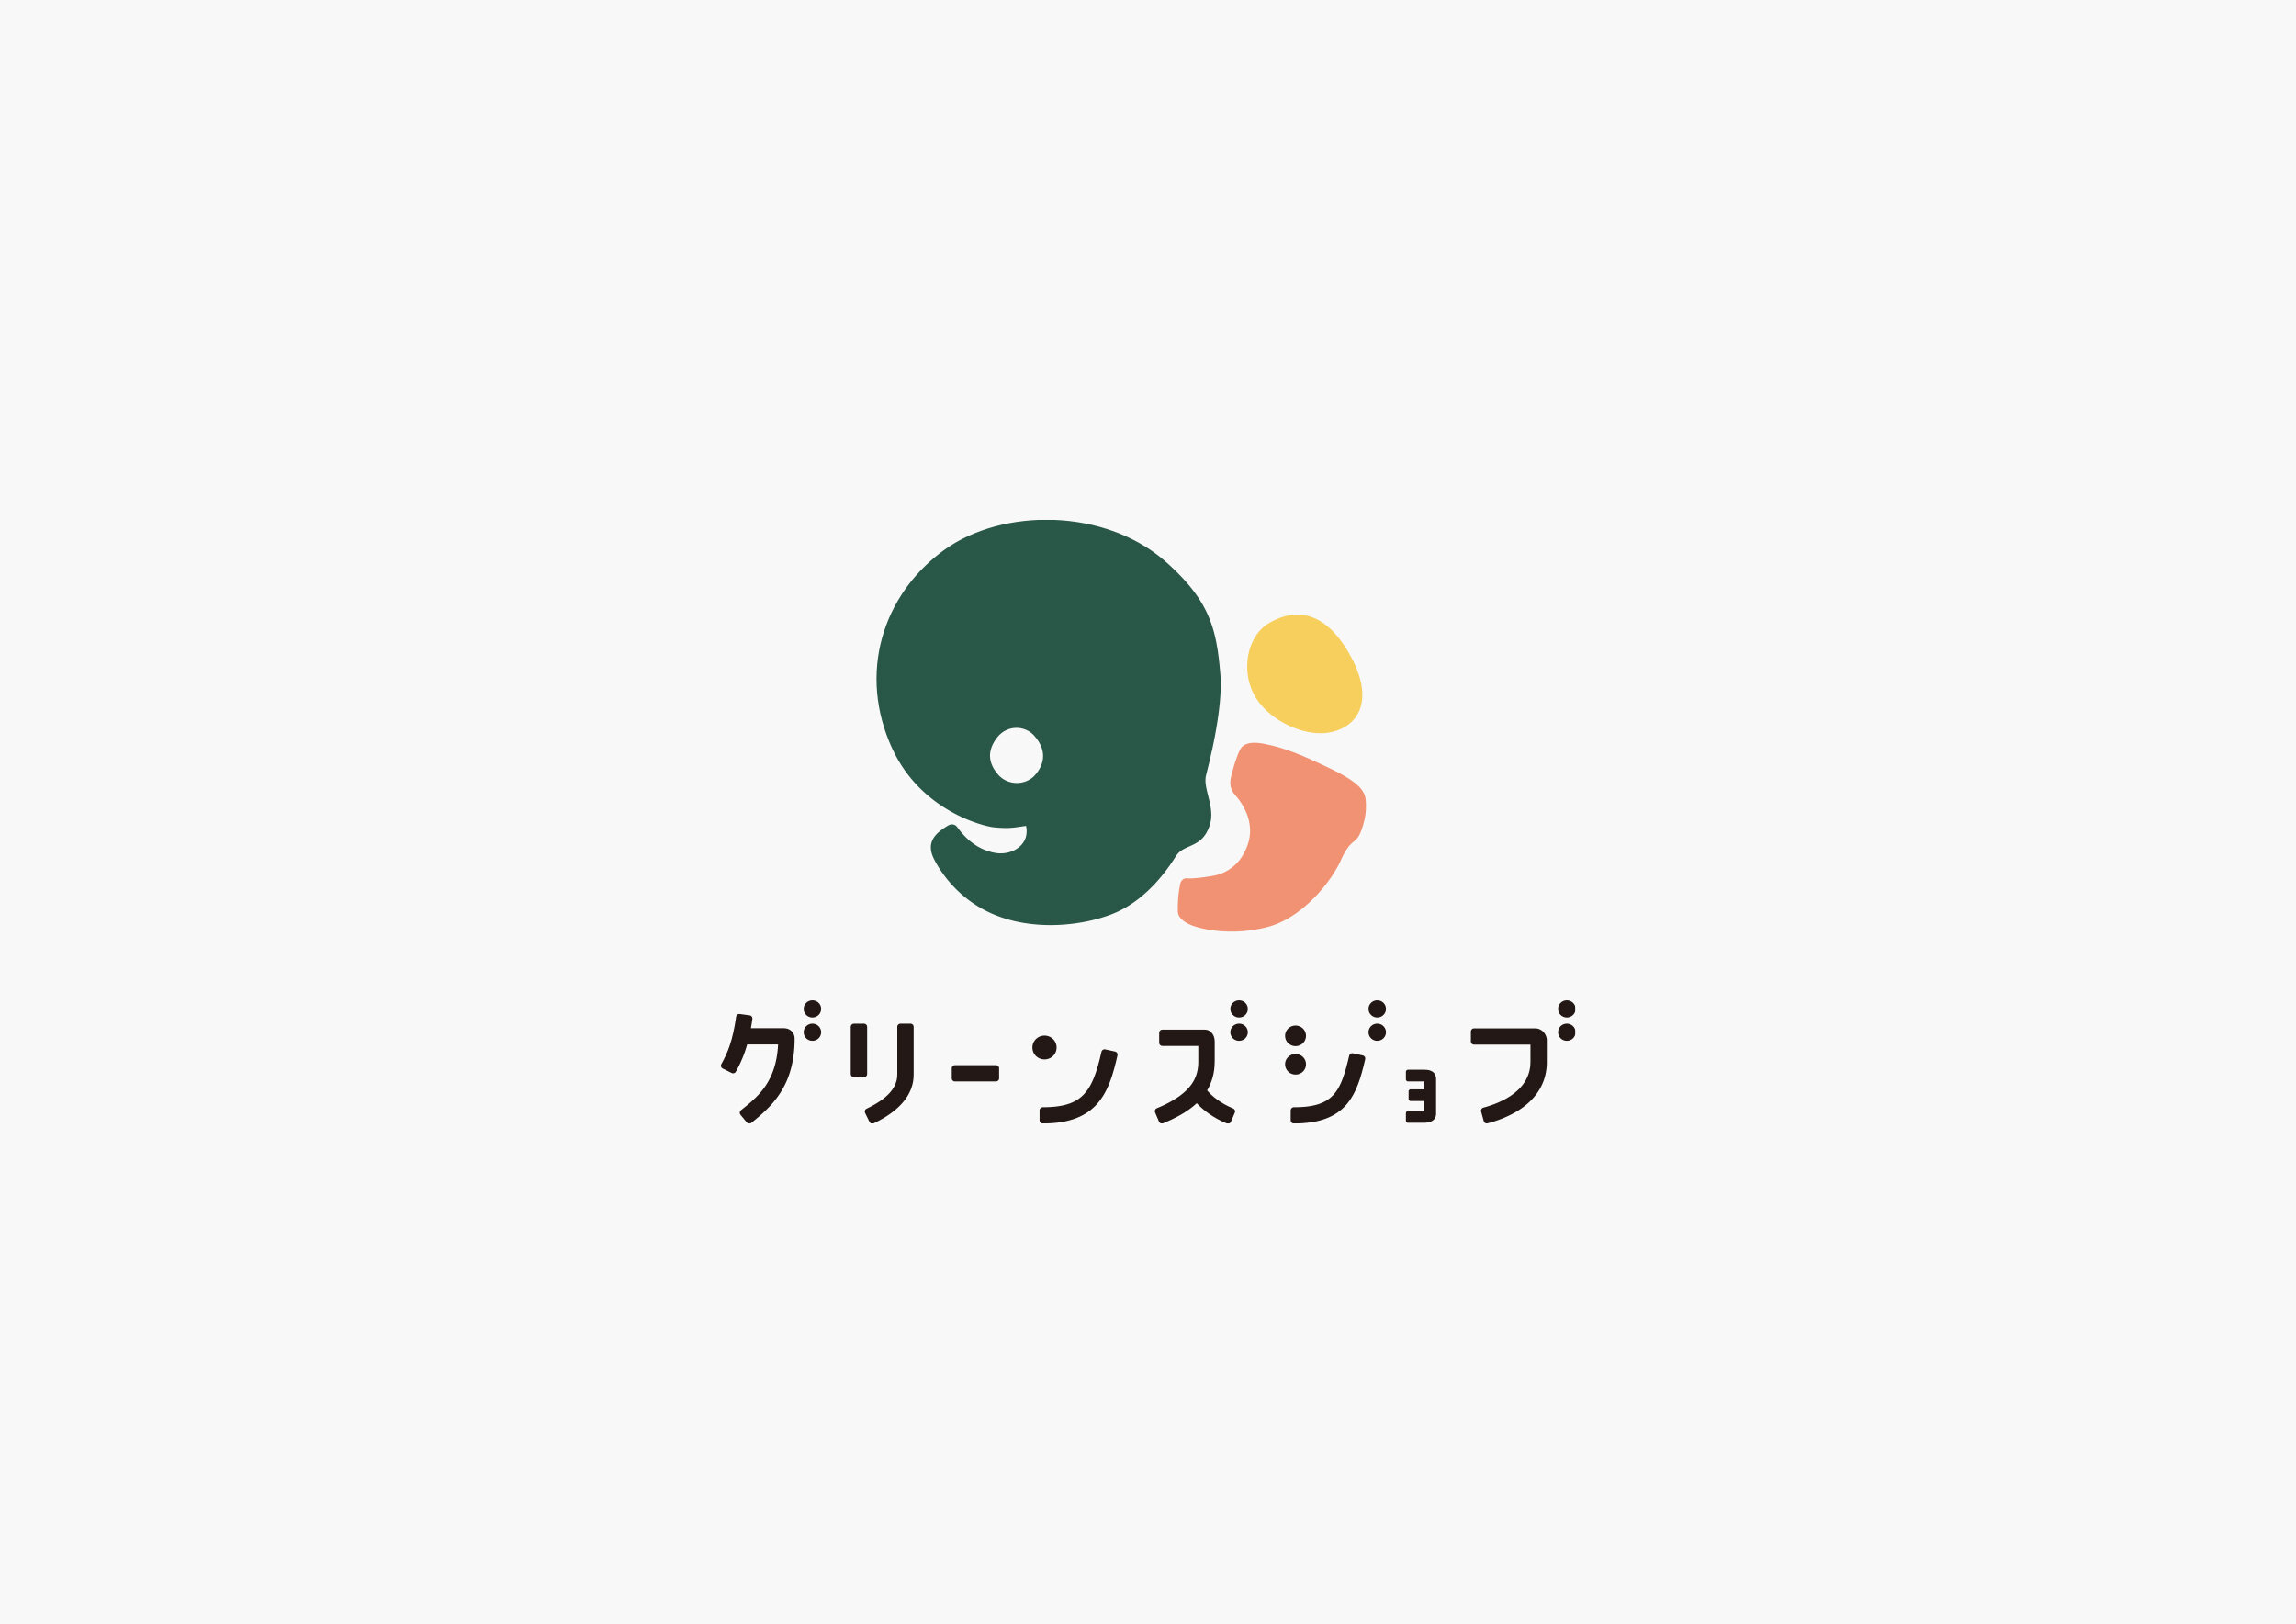 greenzjob_logo_2.jpg